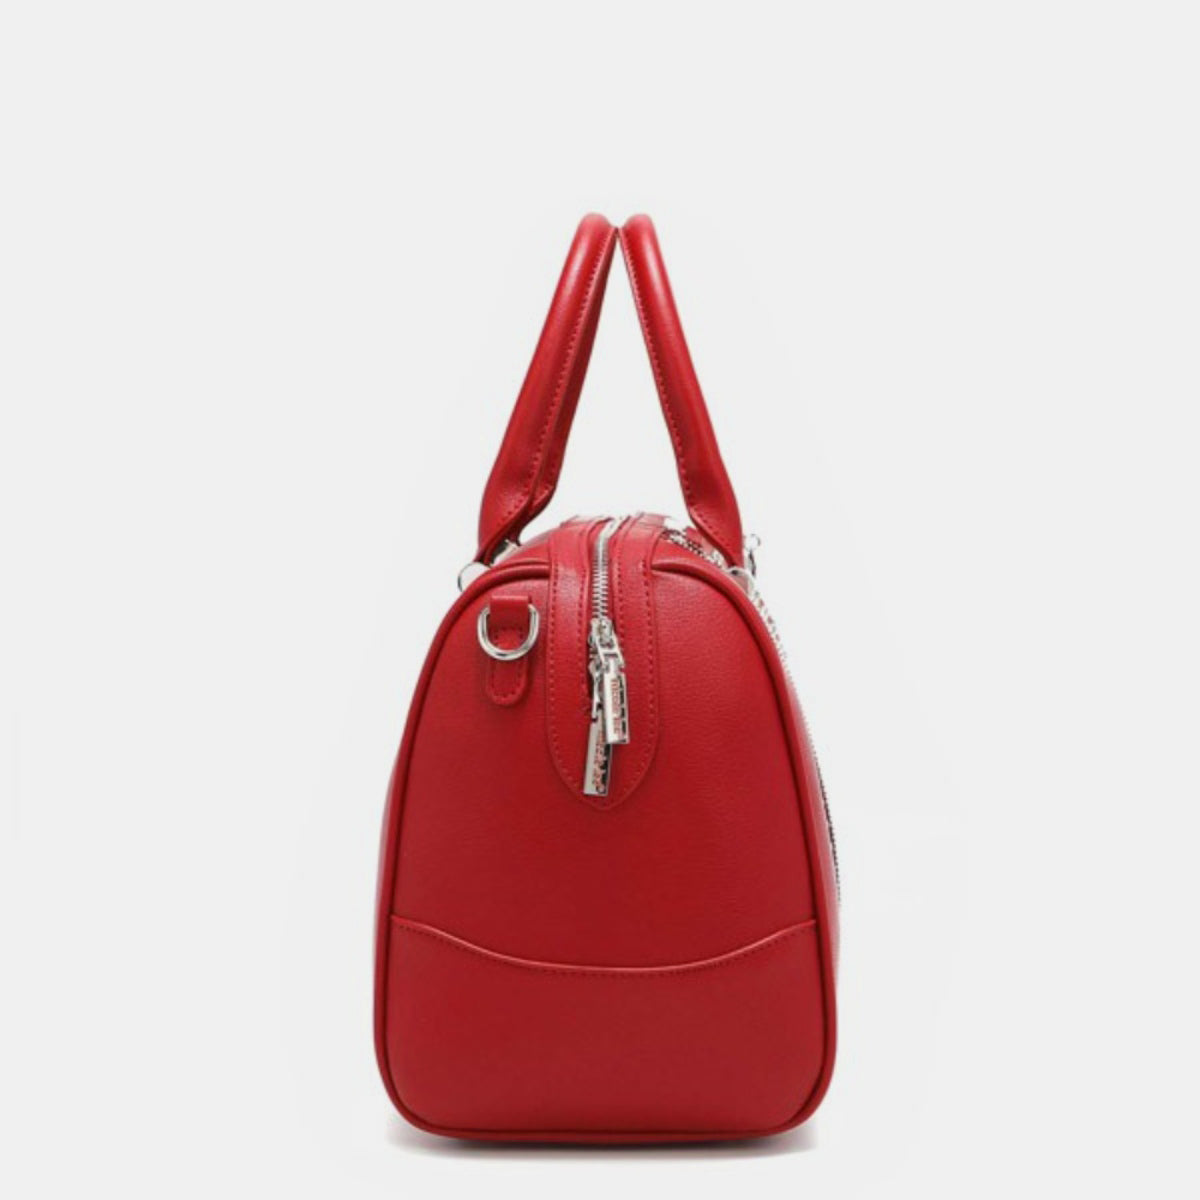 TEEK - Red NL Studded Boston Bag BAG TEEK Trend   